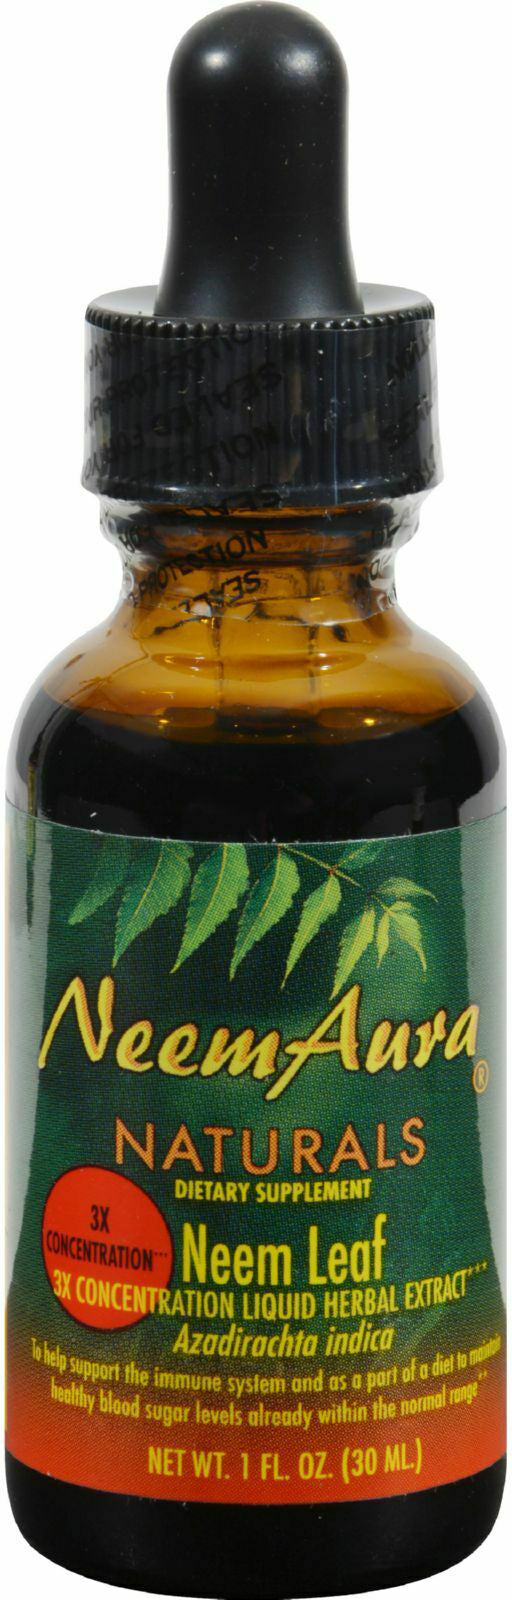 Neem Leaf 3X Concentrate, 1 Fl Oz (30 mL) Liquid , Brand_NeemAura Form_Liquid Size_1 Fl Oz